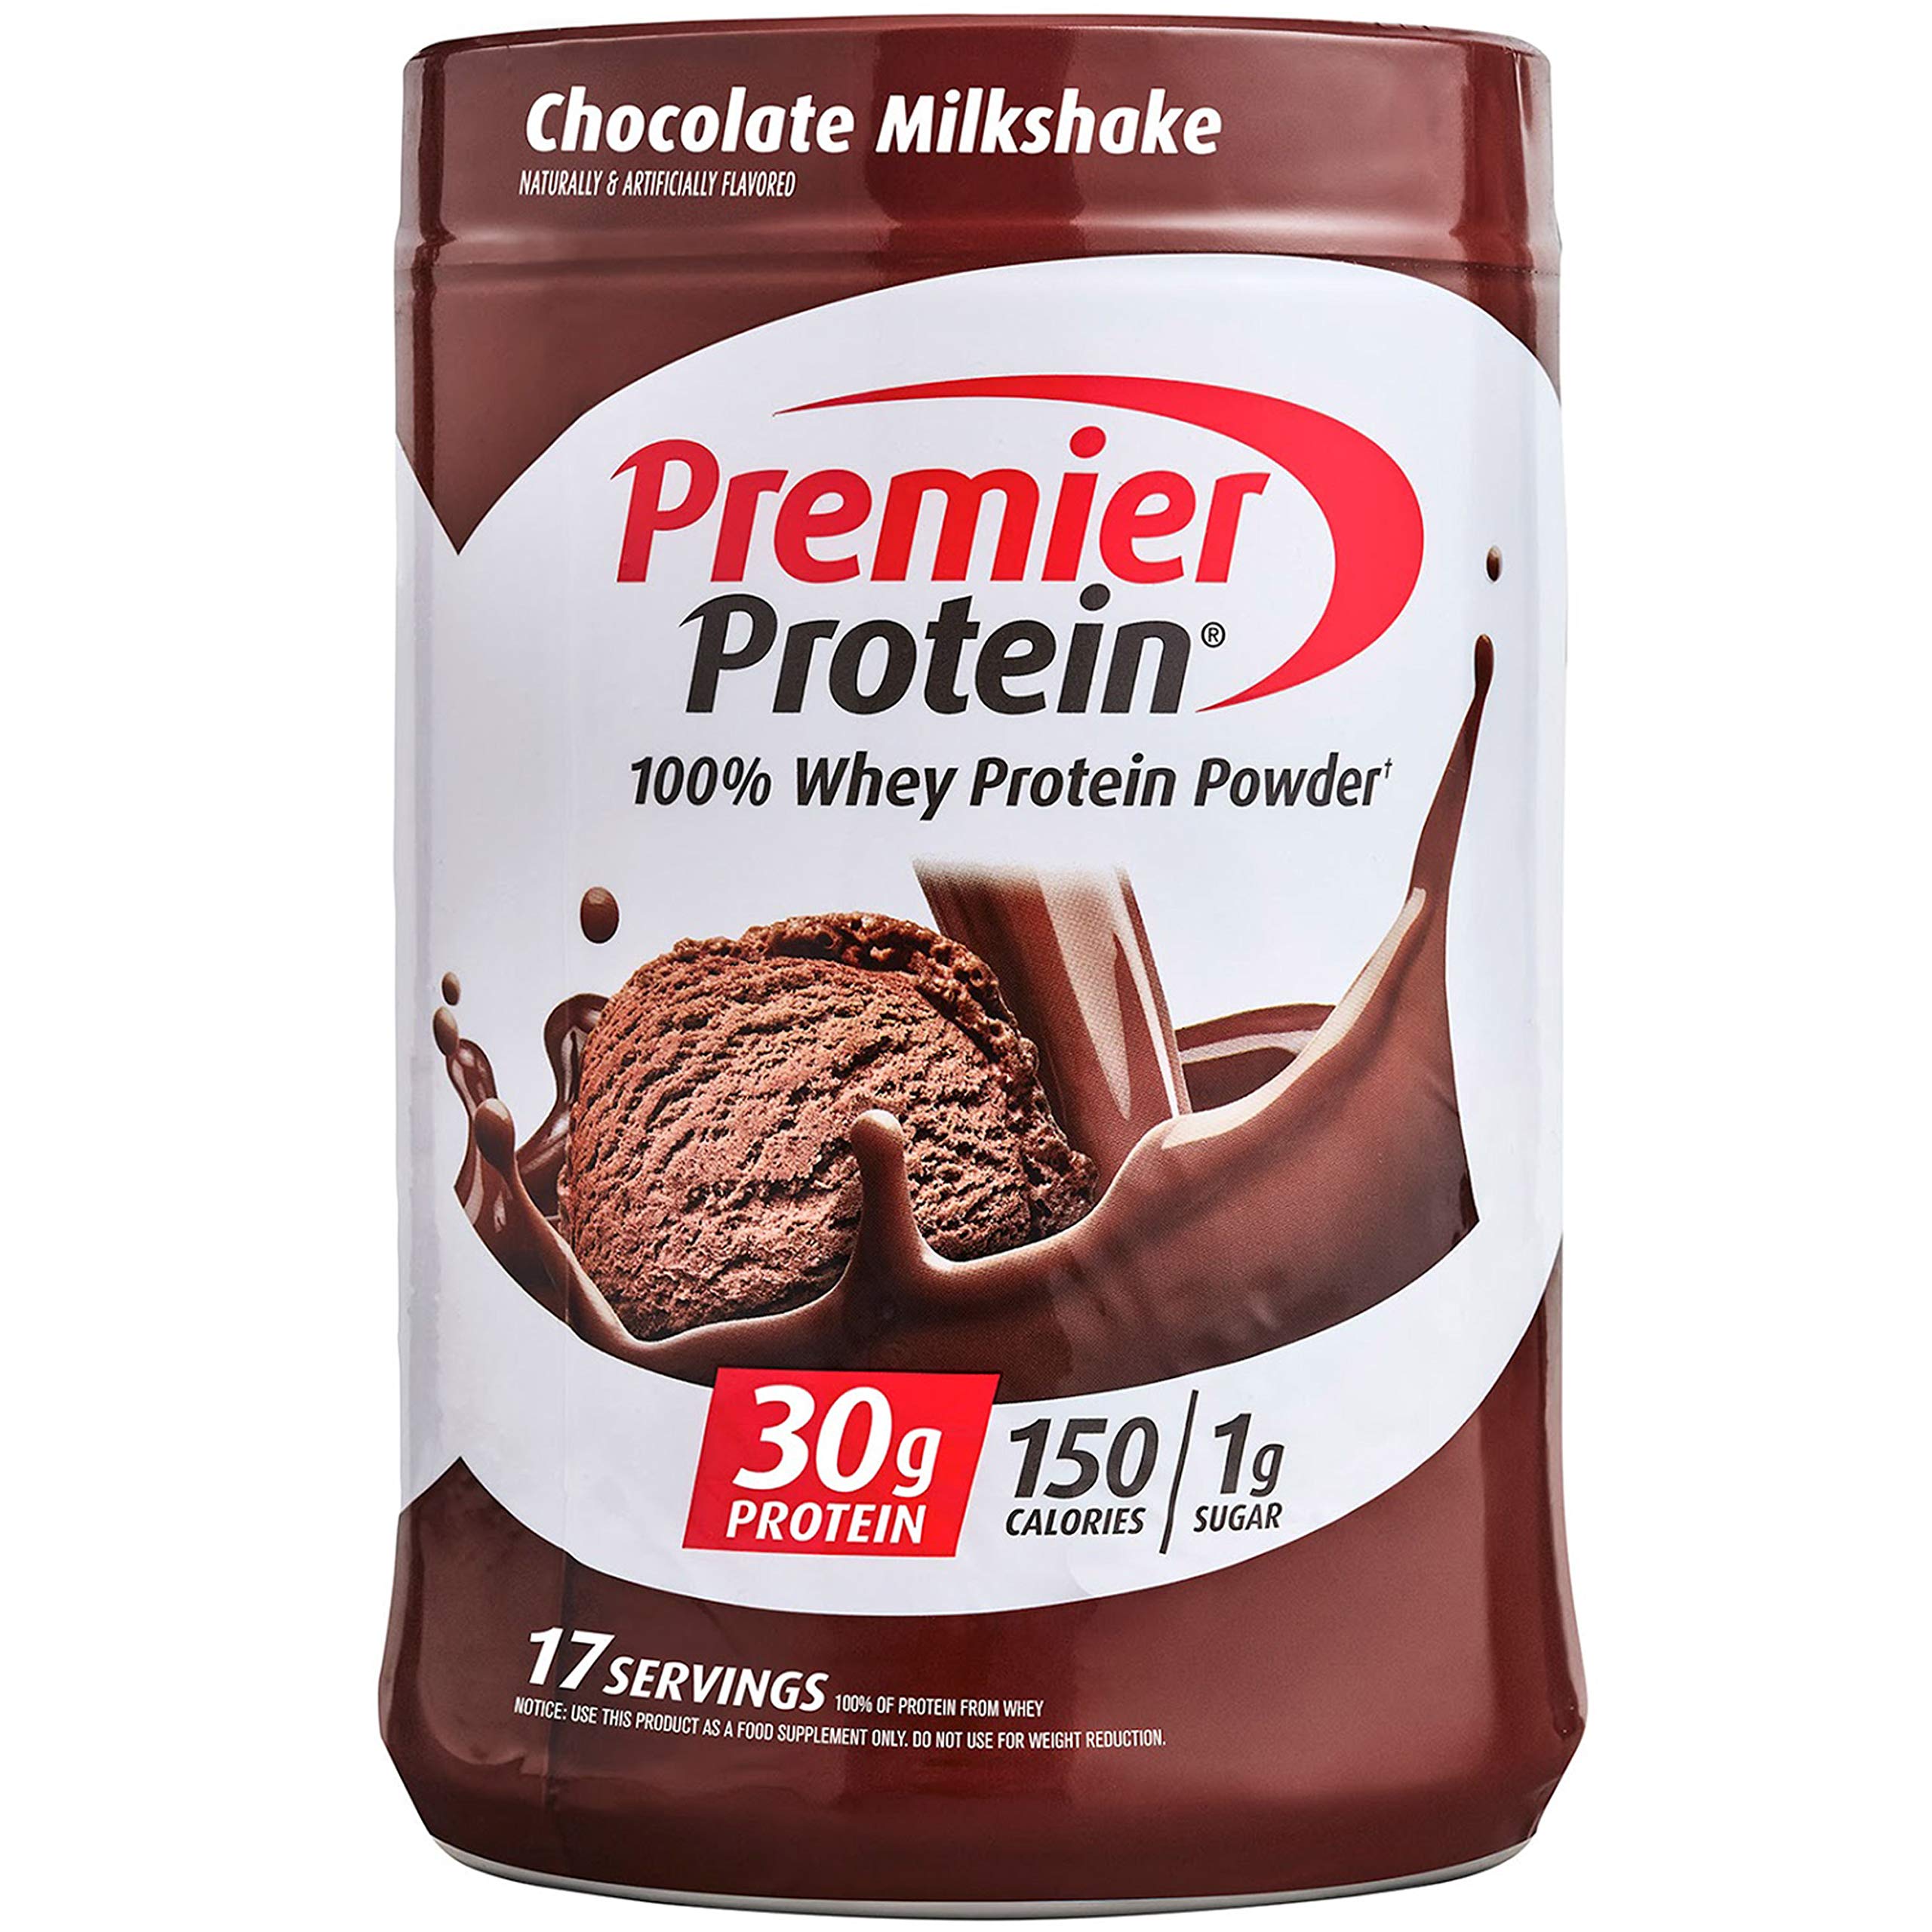 Amazon: 2 x Premier Protein Powder, Chocolate Milkshake, 30g Protein, 1g Sugar, 100% Whey Protein, Keto Friendly, No Soy Ingredients, 24.5 oz (49 oz total) for $27.38